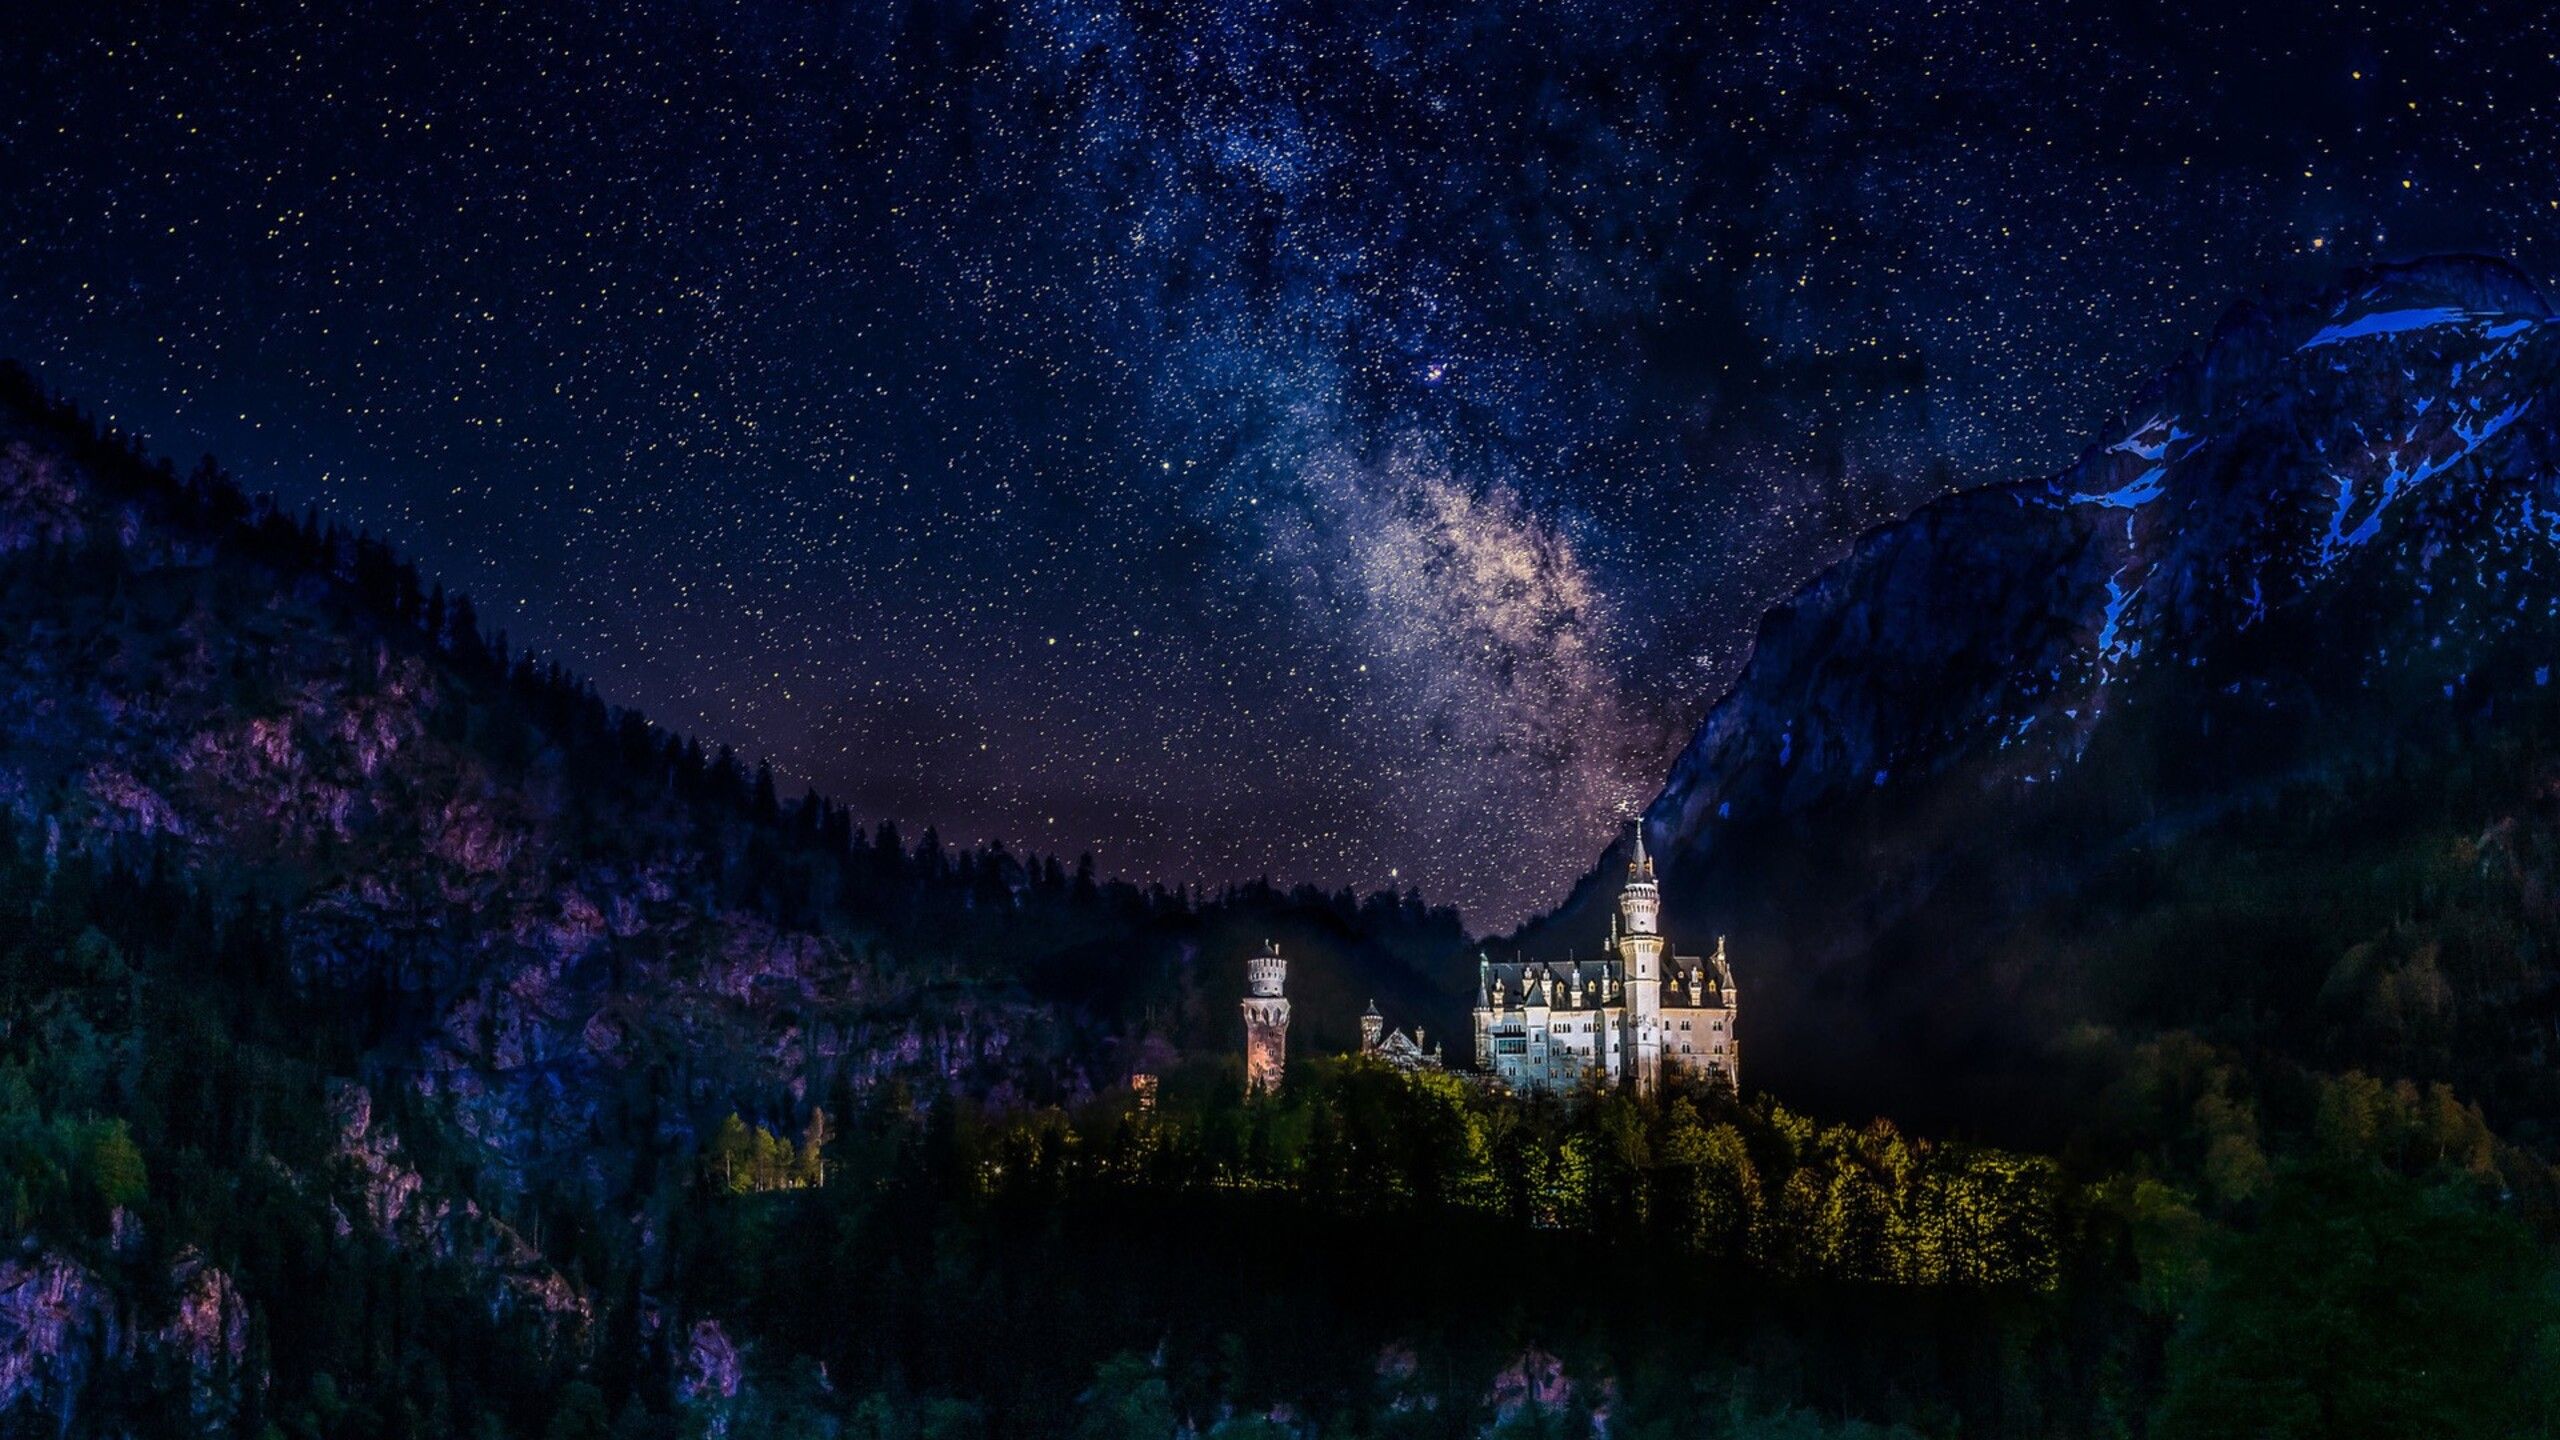 2560x1440 Neuschwanstein Castle 1440p Resolution Hd 4k Wallpaper Image Background Photo And Picture